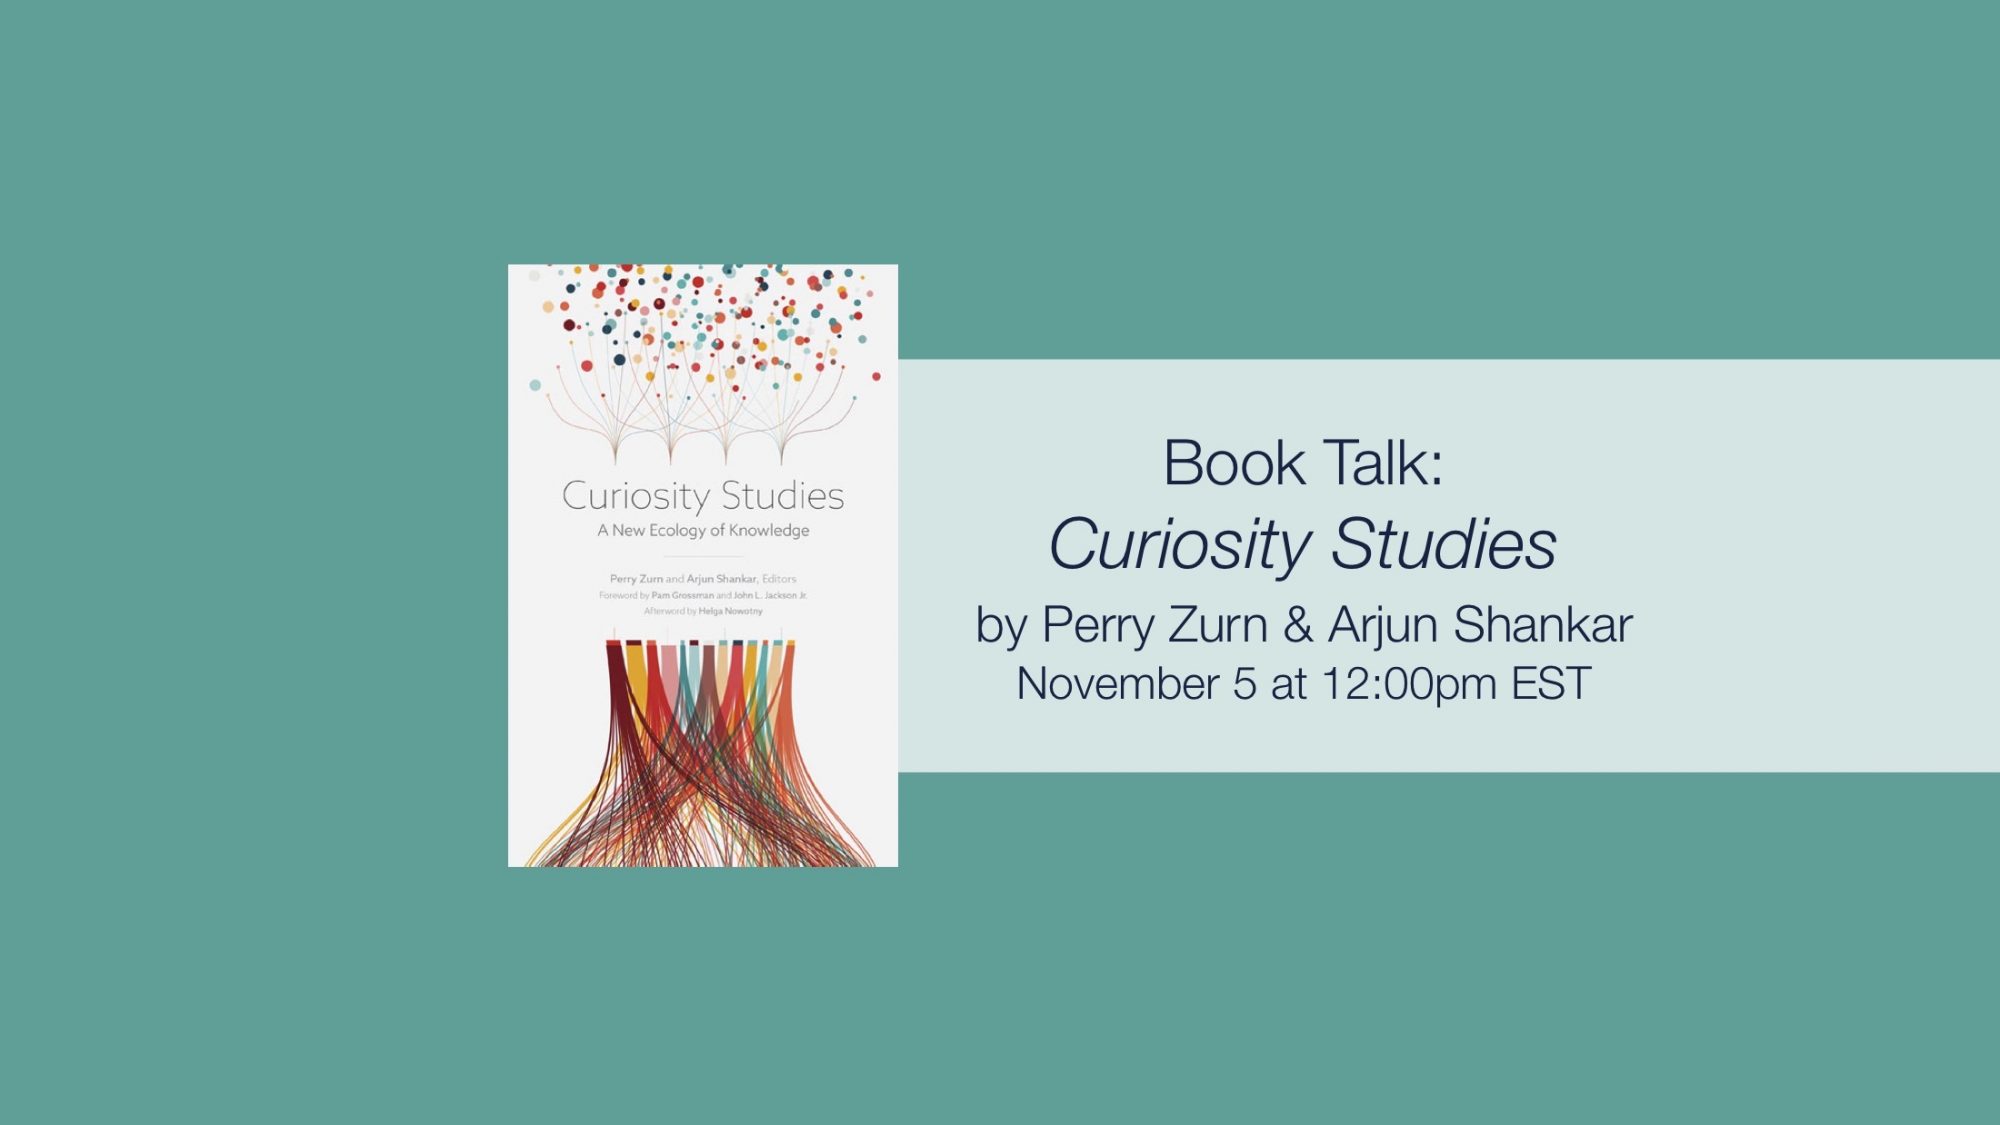 Book Talk: Curiosity Studies by Arjun Shankar and Perry Zurn on November 5 at 12pm EST